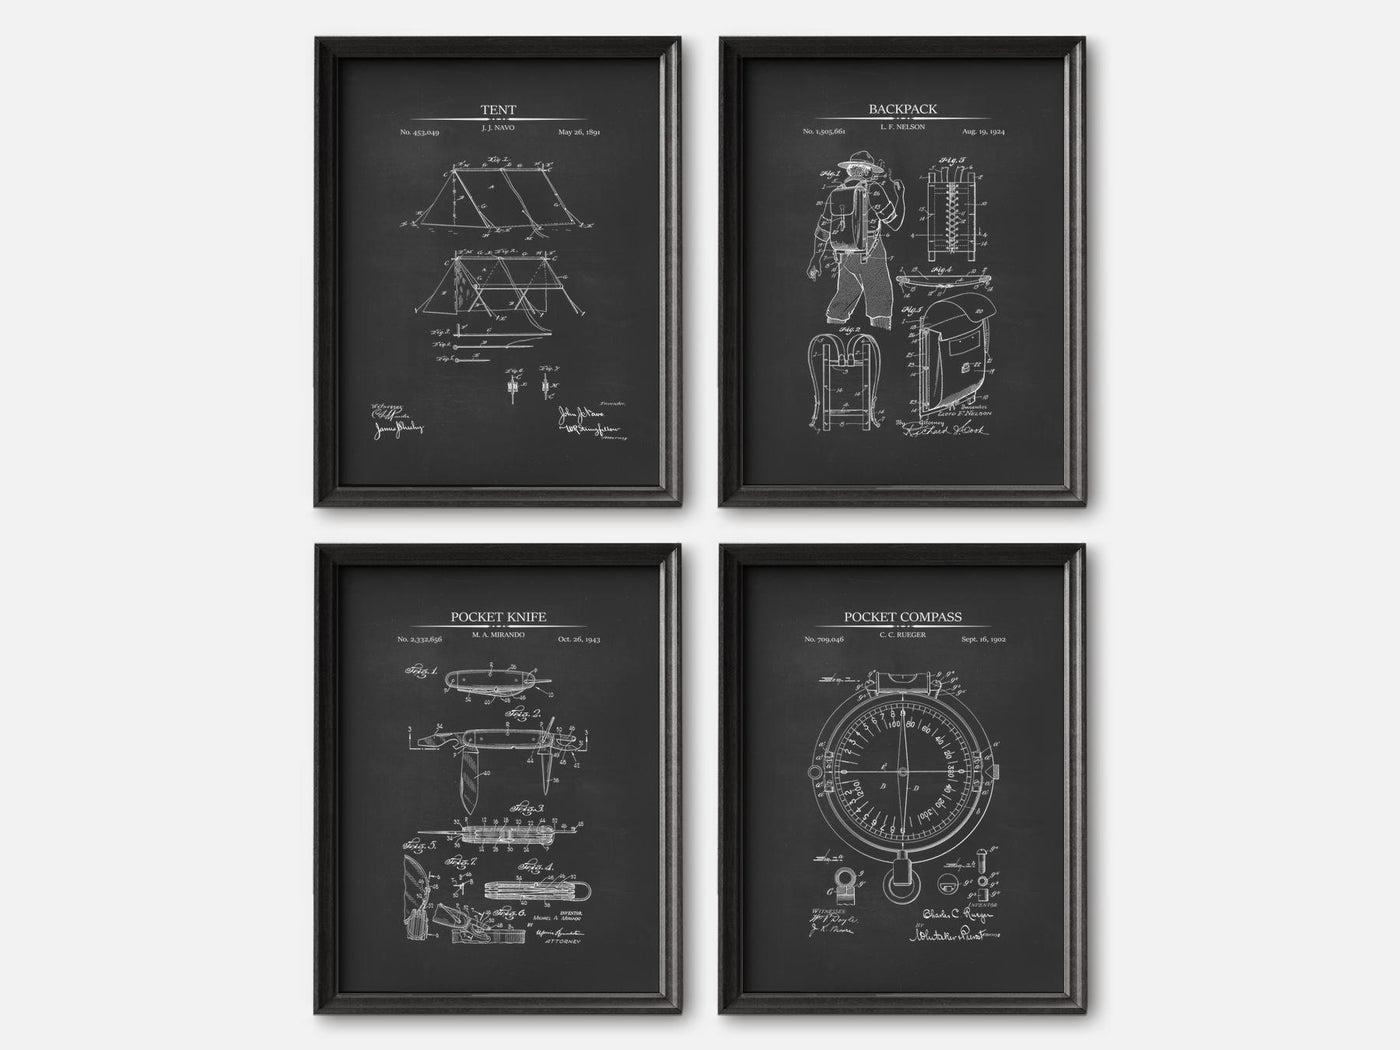 Camping Patent Print Set of 3 mockup - A_t10017-V1-PC_F+B-SS_4-PS_5x7-C_cha variant